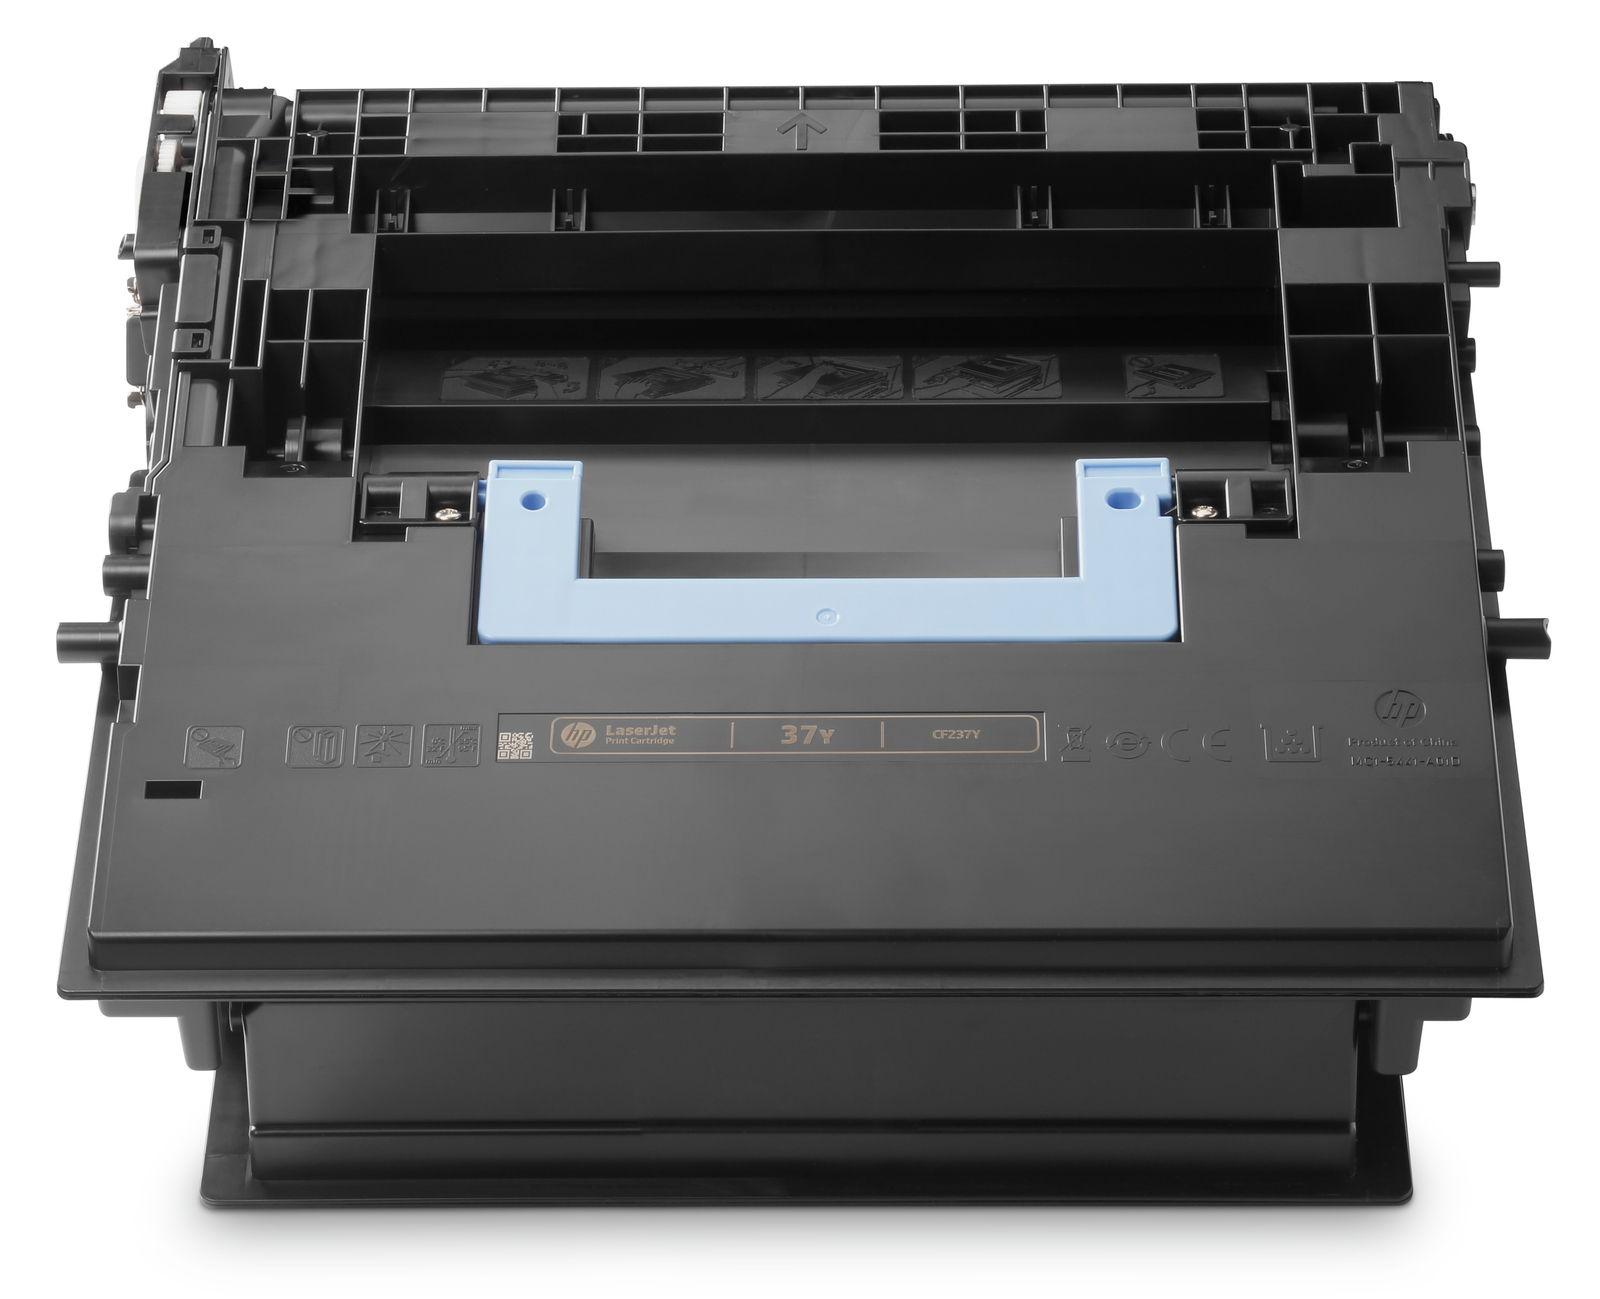 Laserjet 37Y sort toner, Hewlett Packard CF237Y